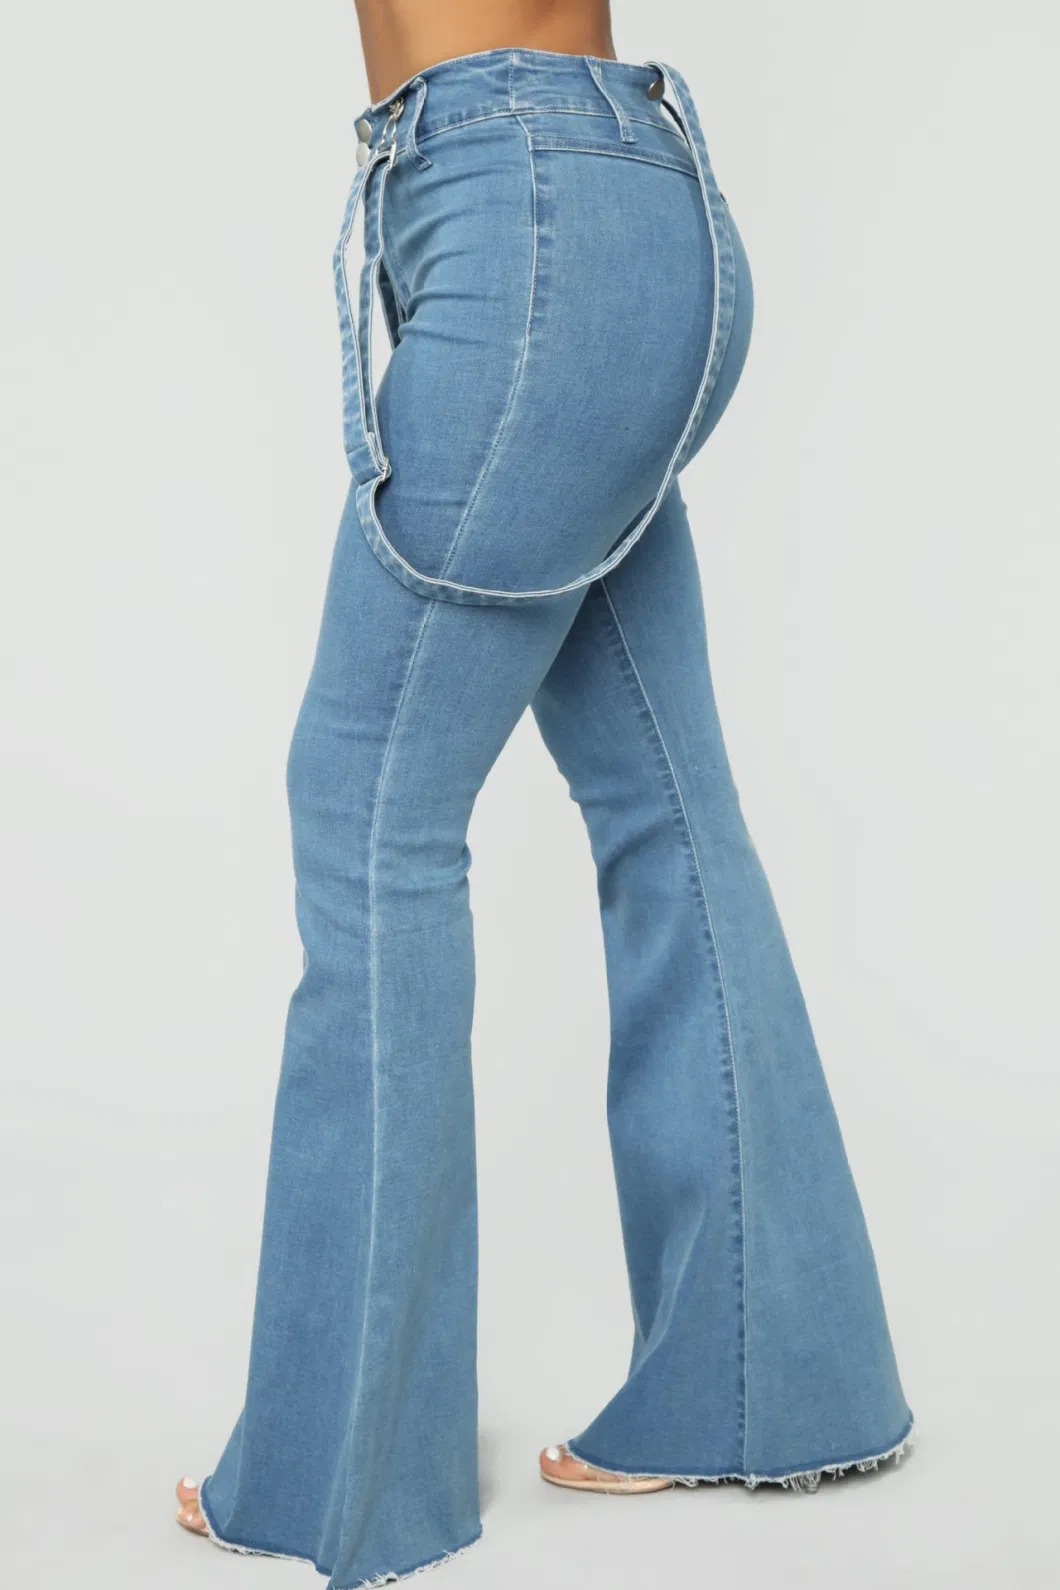 Ladies Stretch Flare Pants Wide Leg Pants Bell-Bottom Denim Jeans